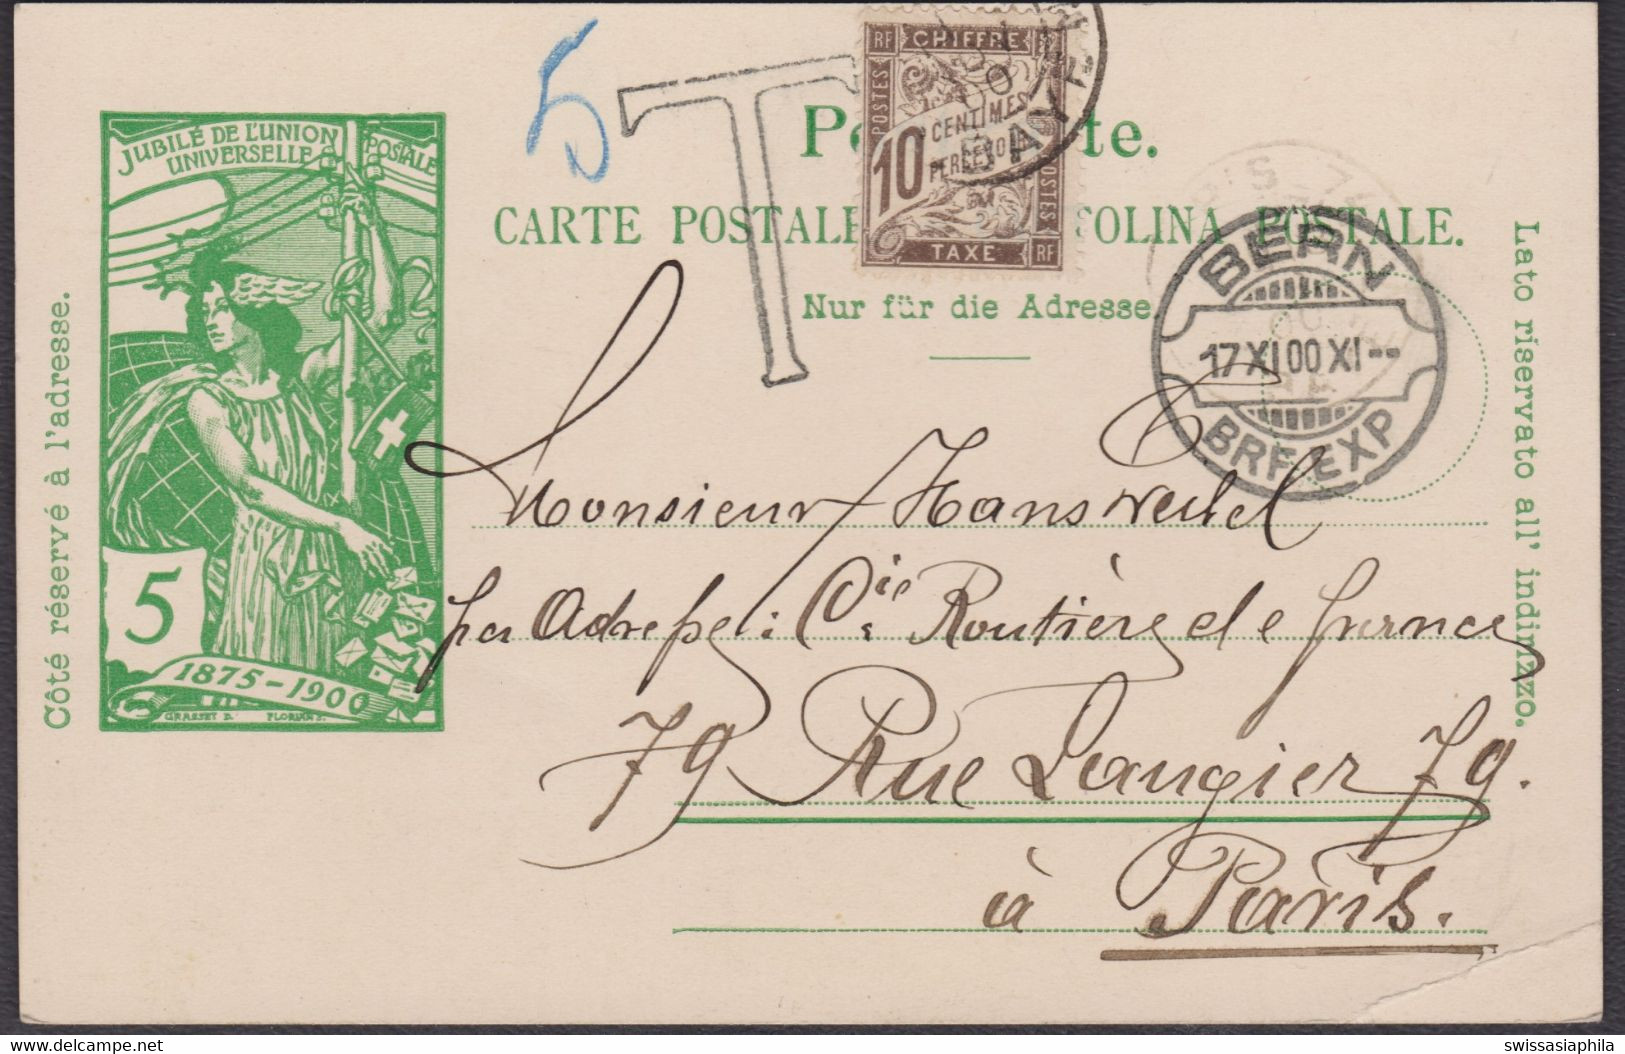 UPU  POSTKARTE - TAXIERT / BERN - PARIS / RASIERKLINGENSTEMPEL 17.XI.00 - Stamped Stationery